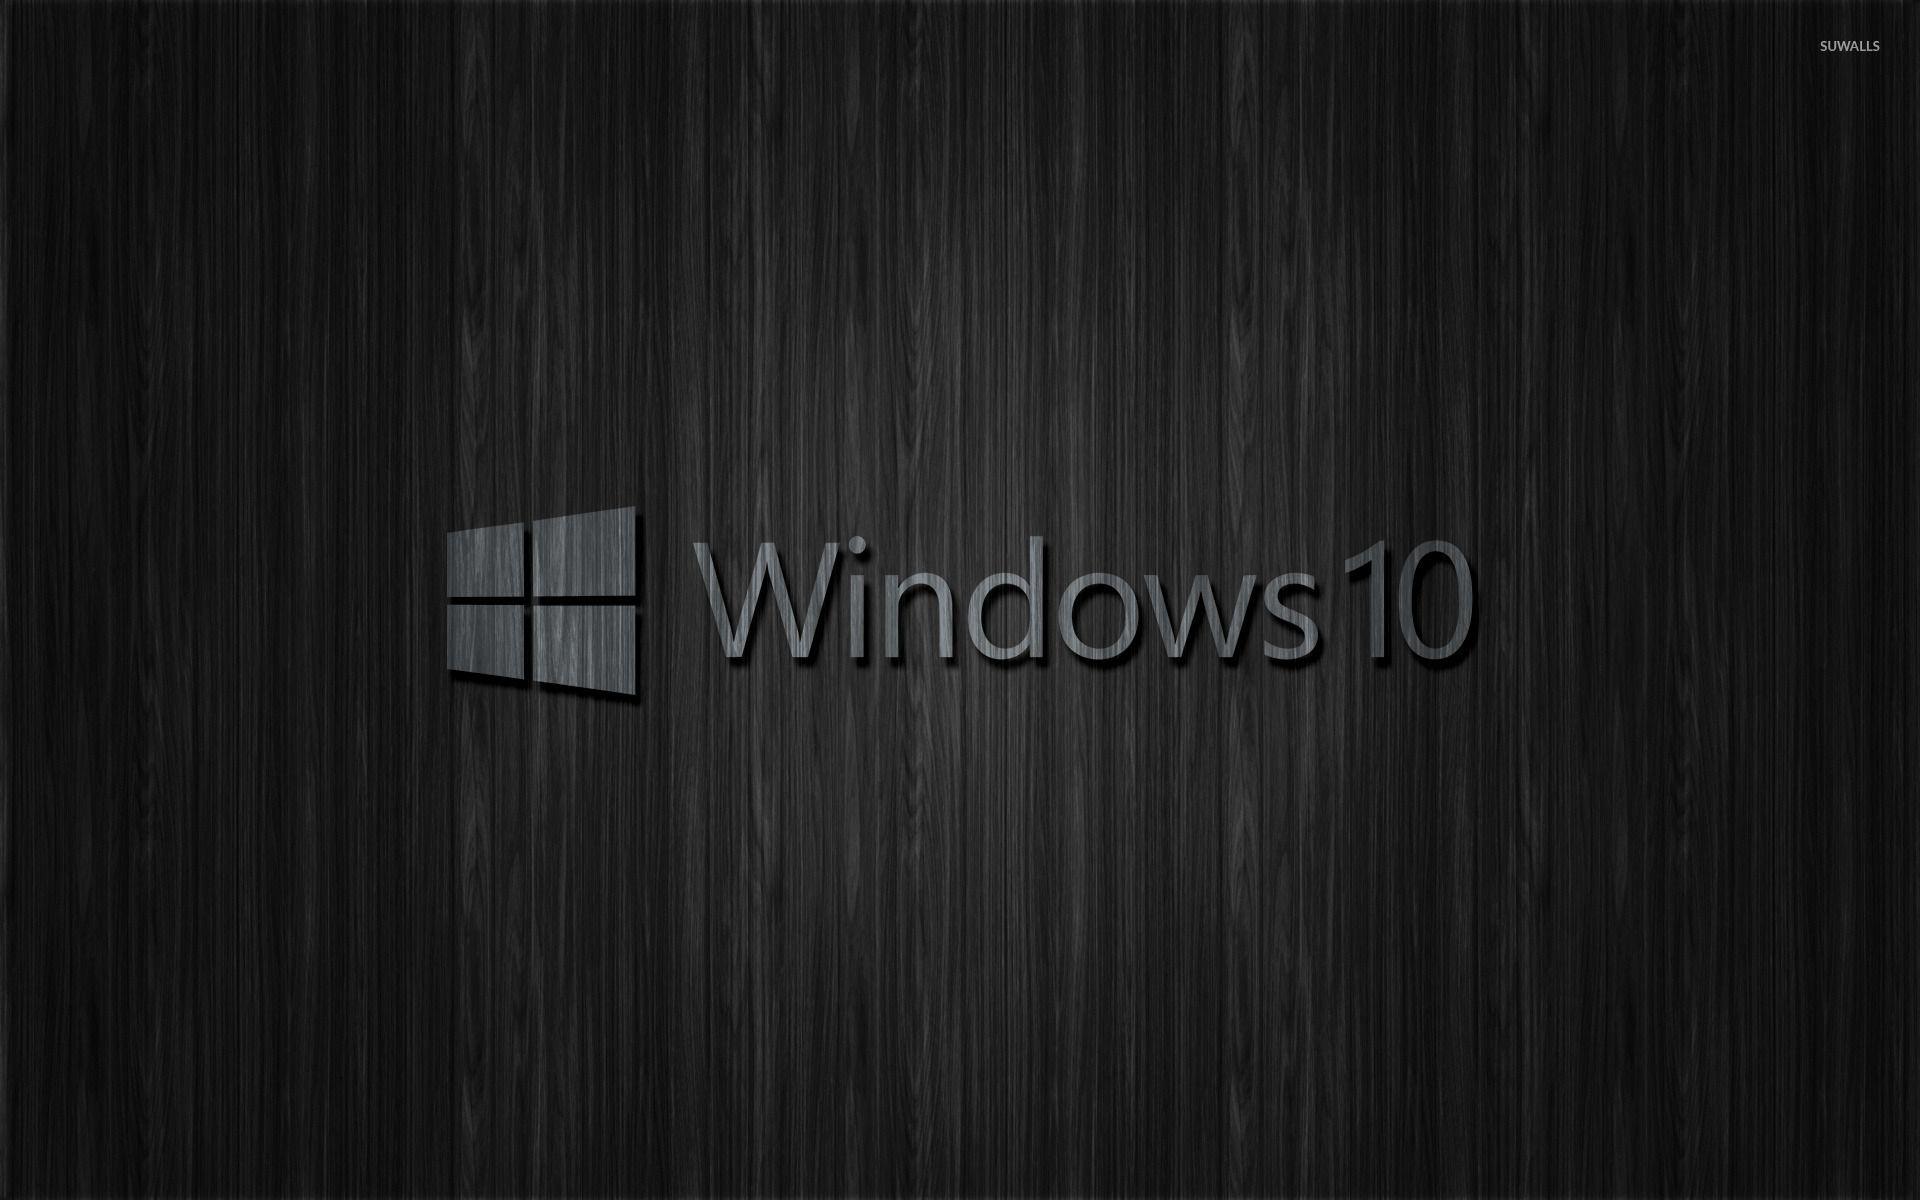 Dark Windows Logo - Sun Wood Windows Logo Wallpapers and Background Images - stmed.net